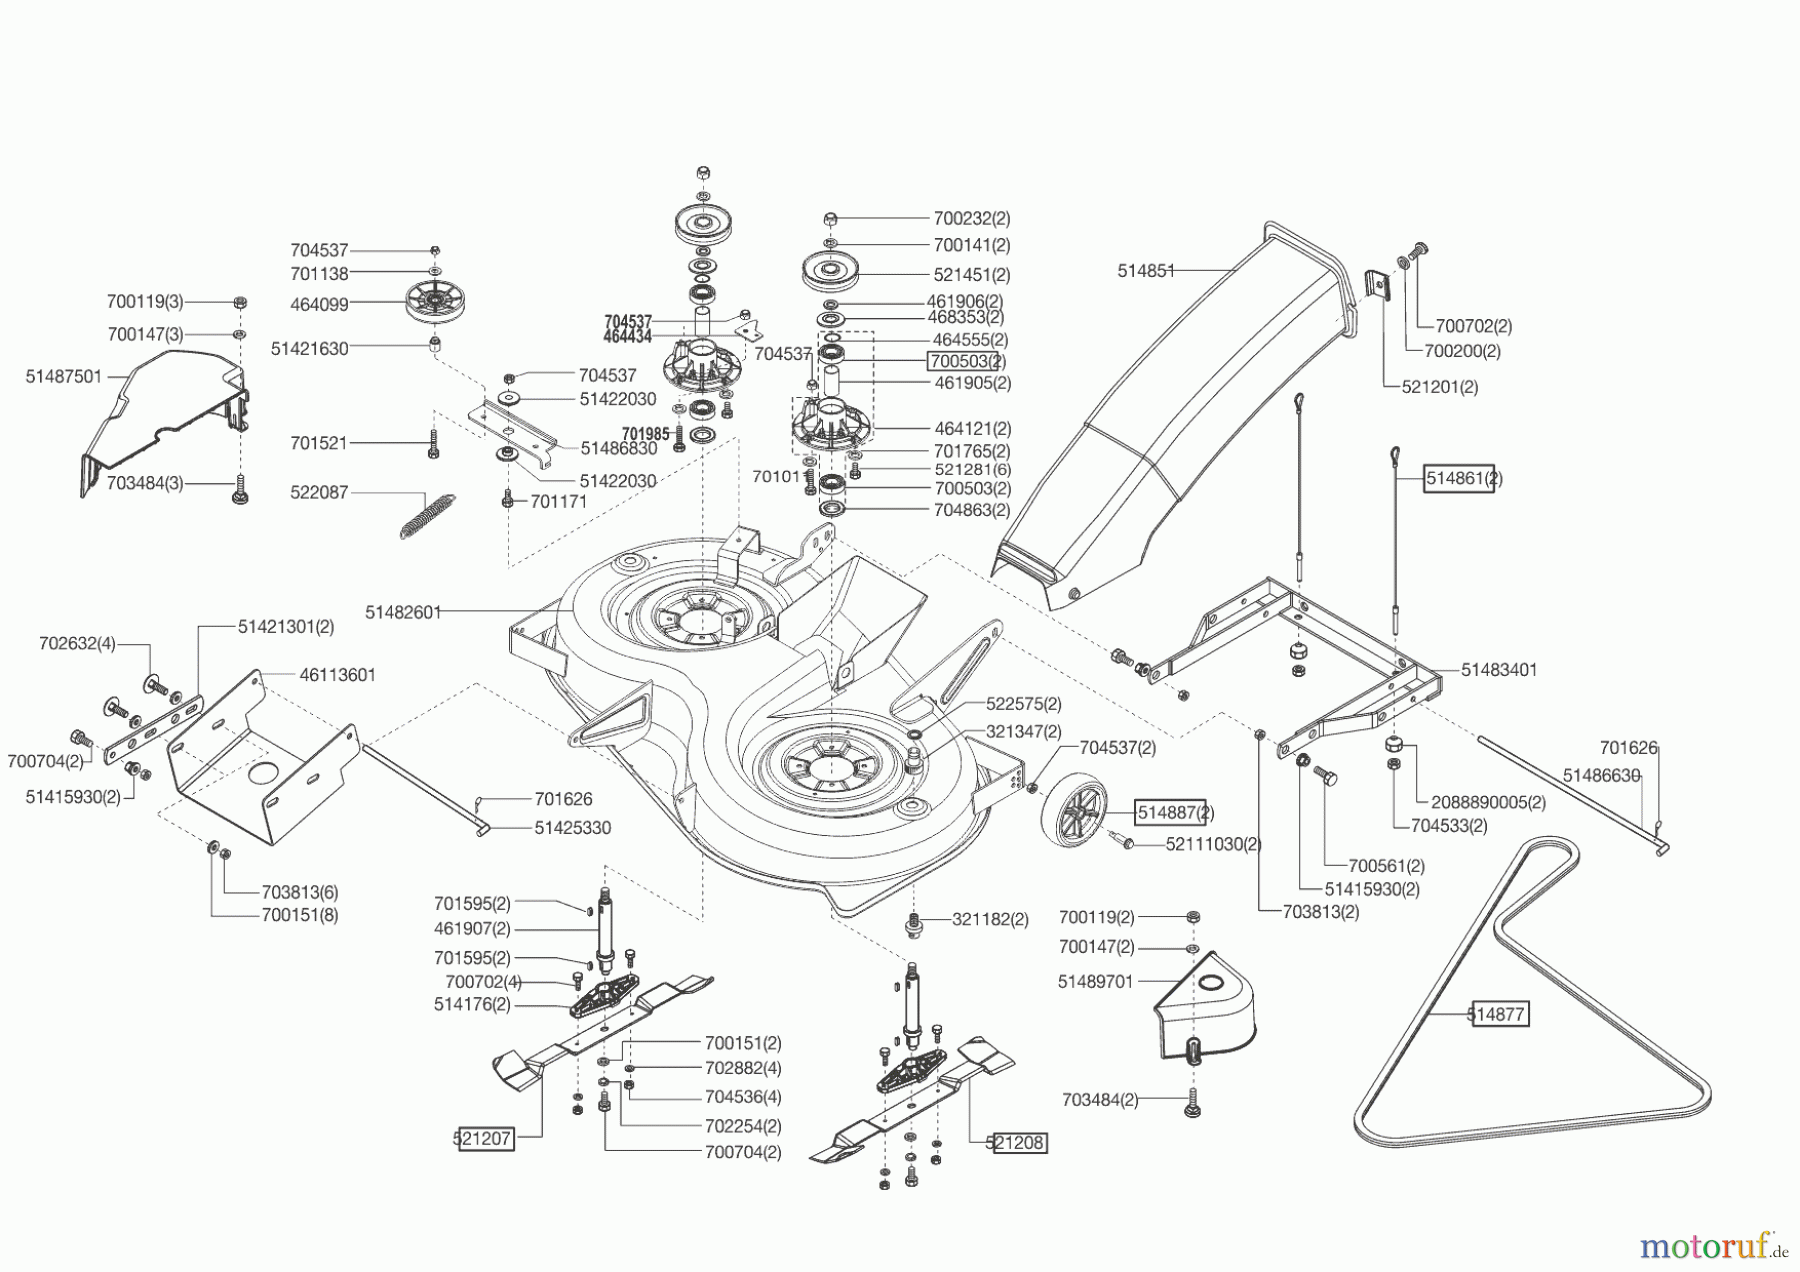  AL-KO Gartentechnik Rasentraktor T 20-102 HD Gulistan  02/2015 - 03/2015 Seite 5